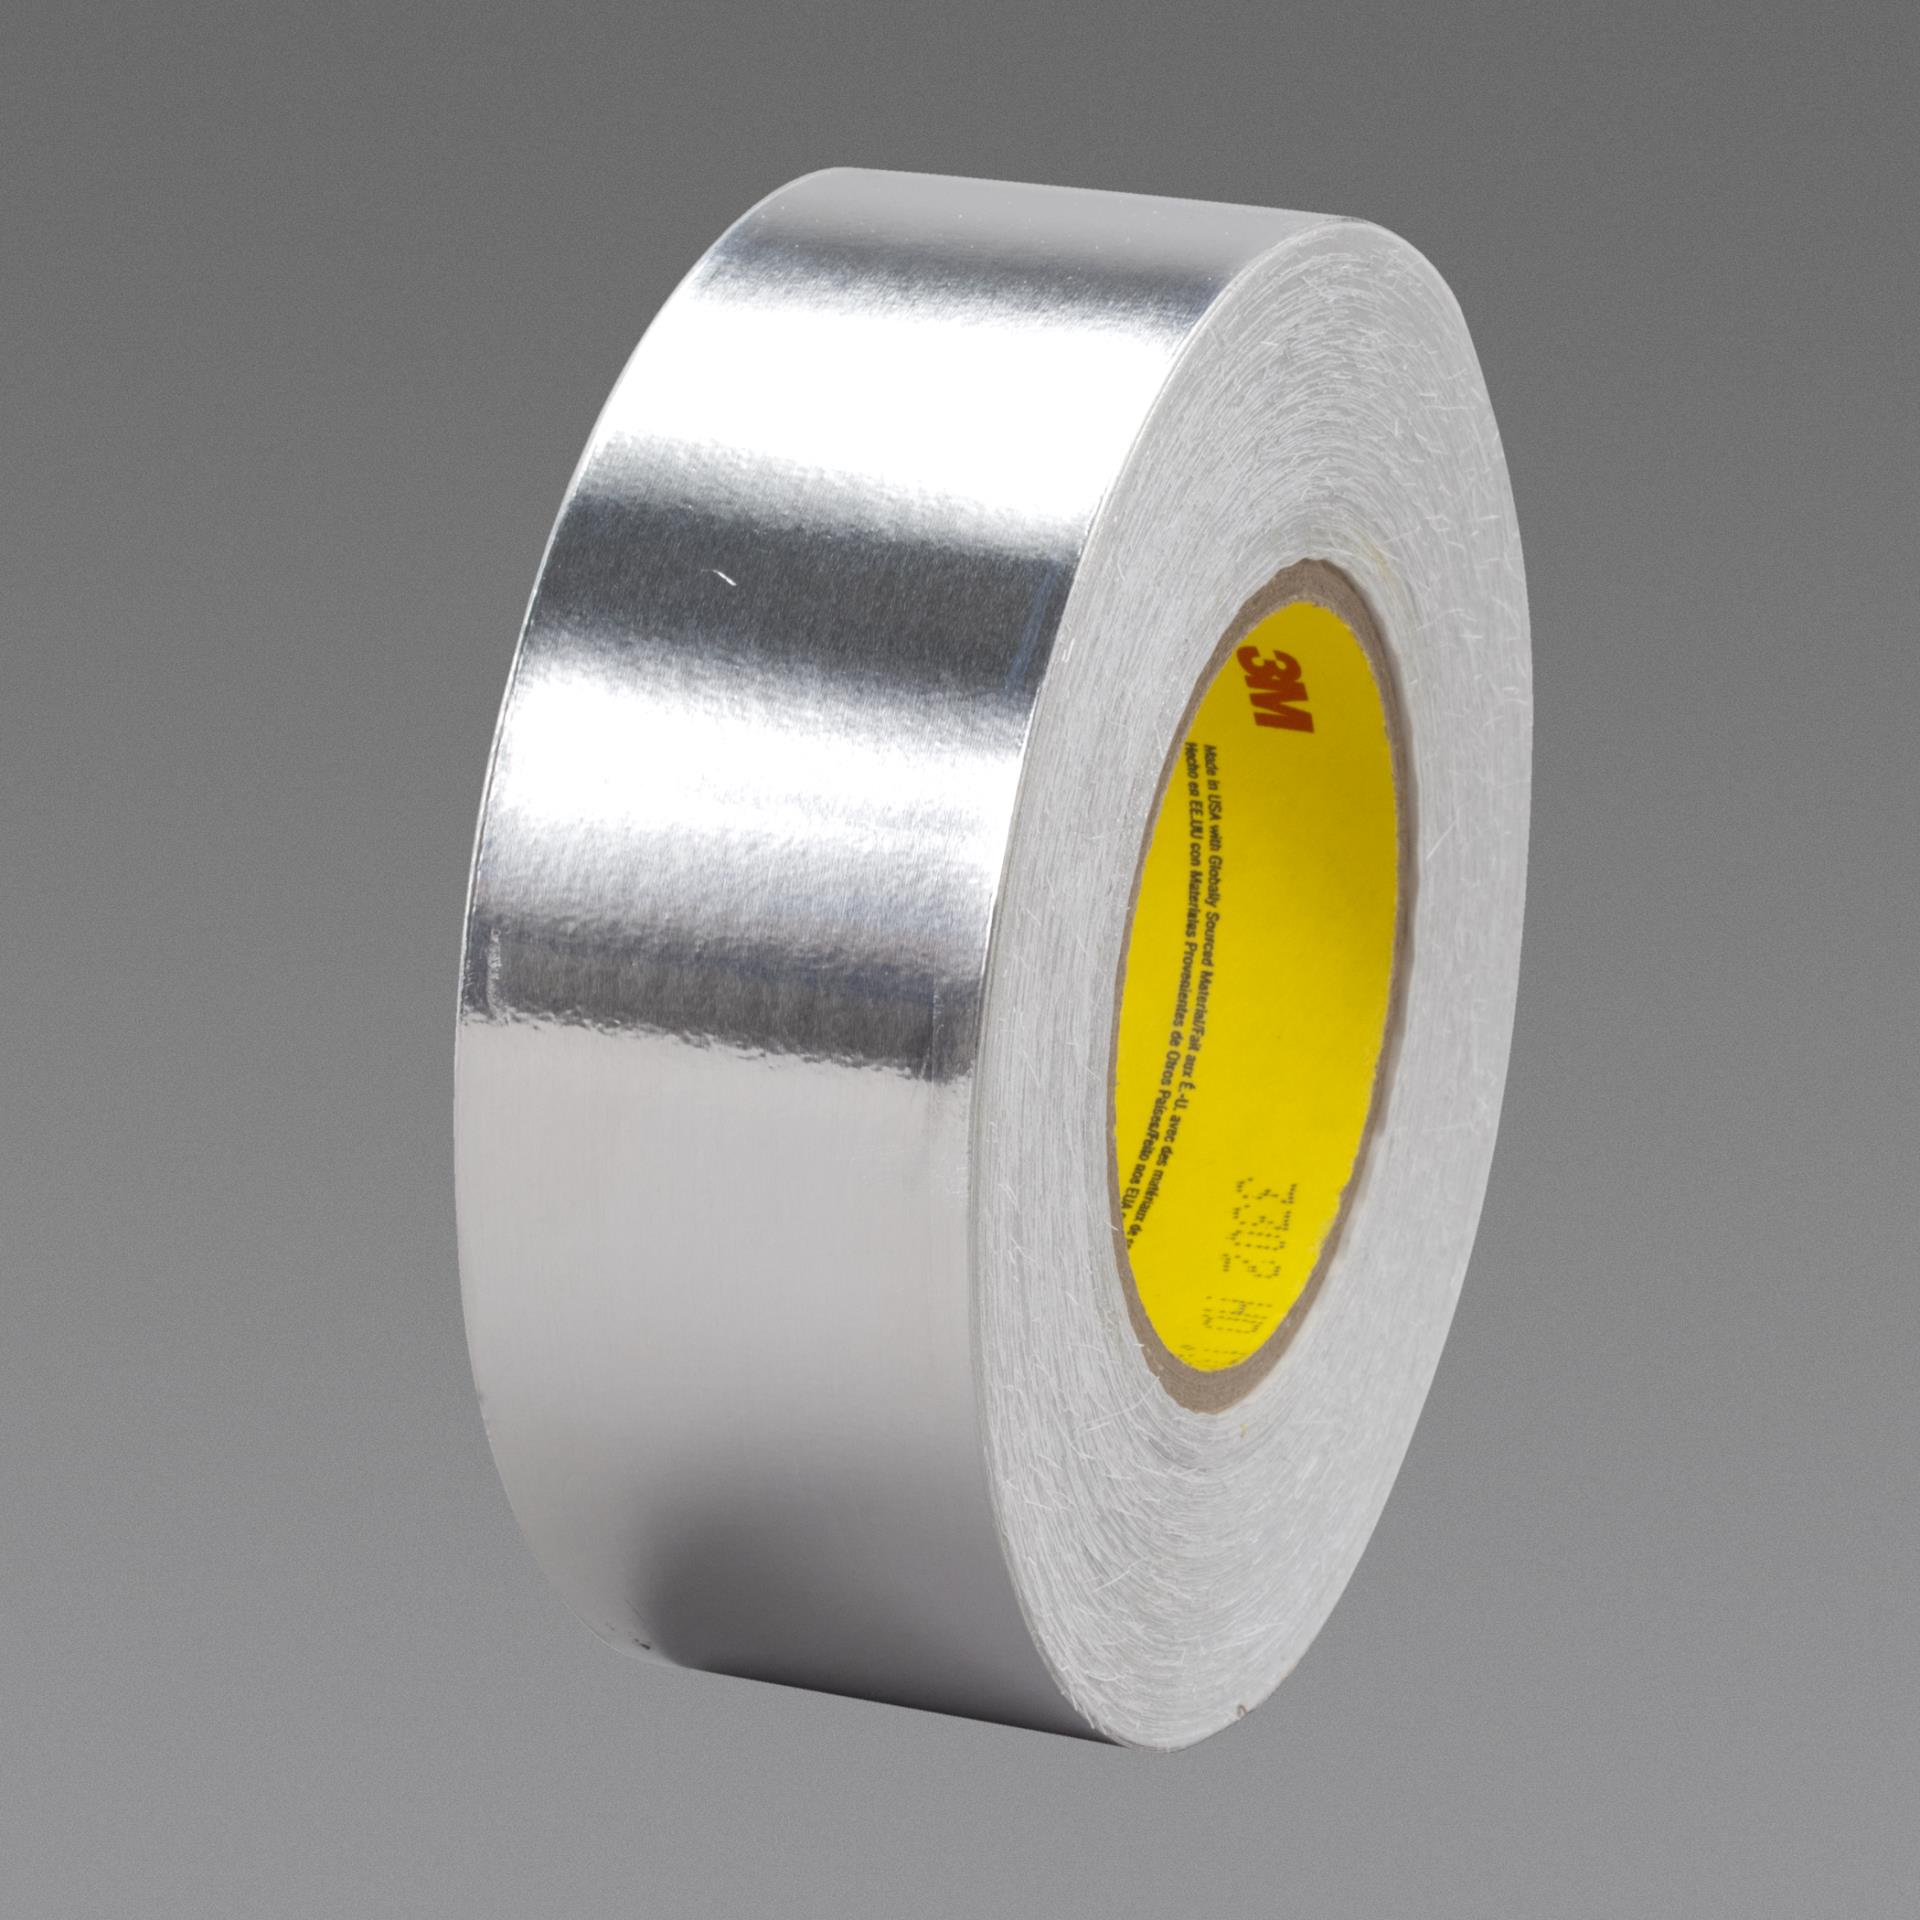 Sensing Foil Tabs Pre-Cut Real Aluminum Foil 24 Pack for Open Reel Tape 